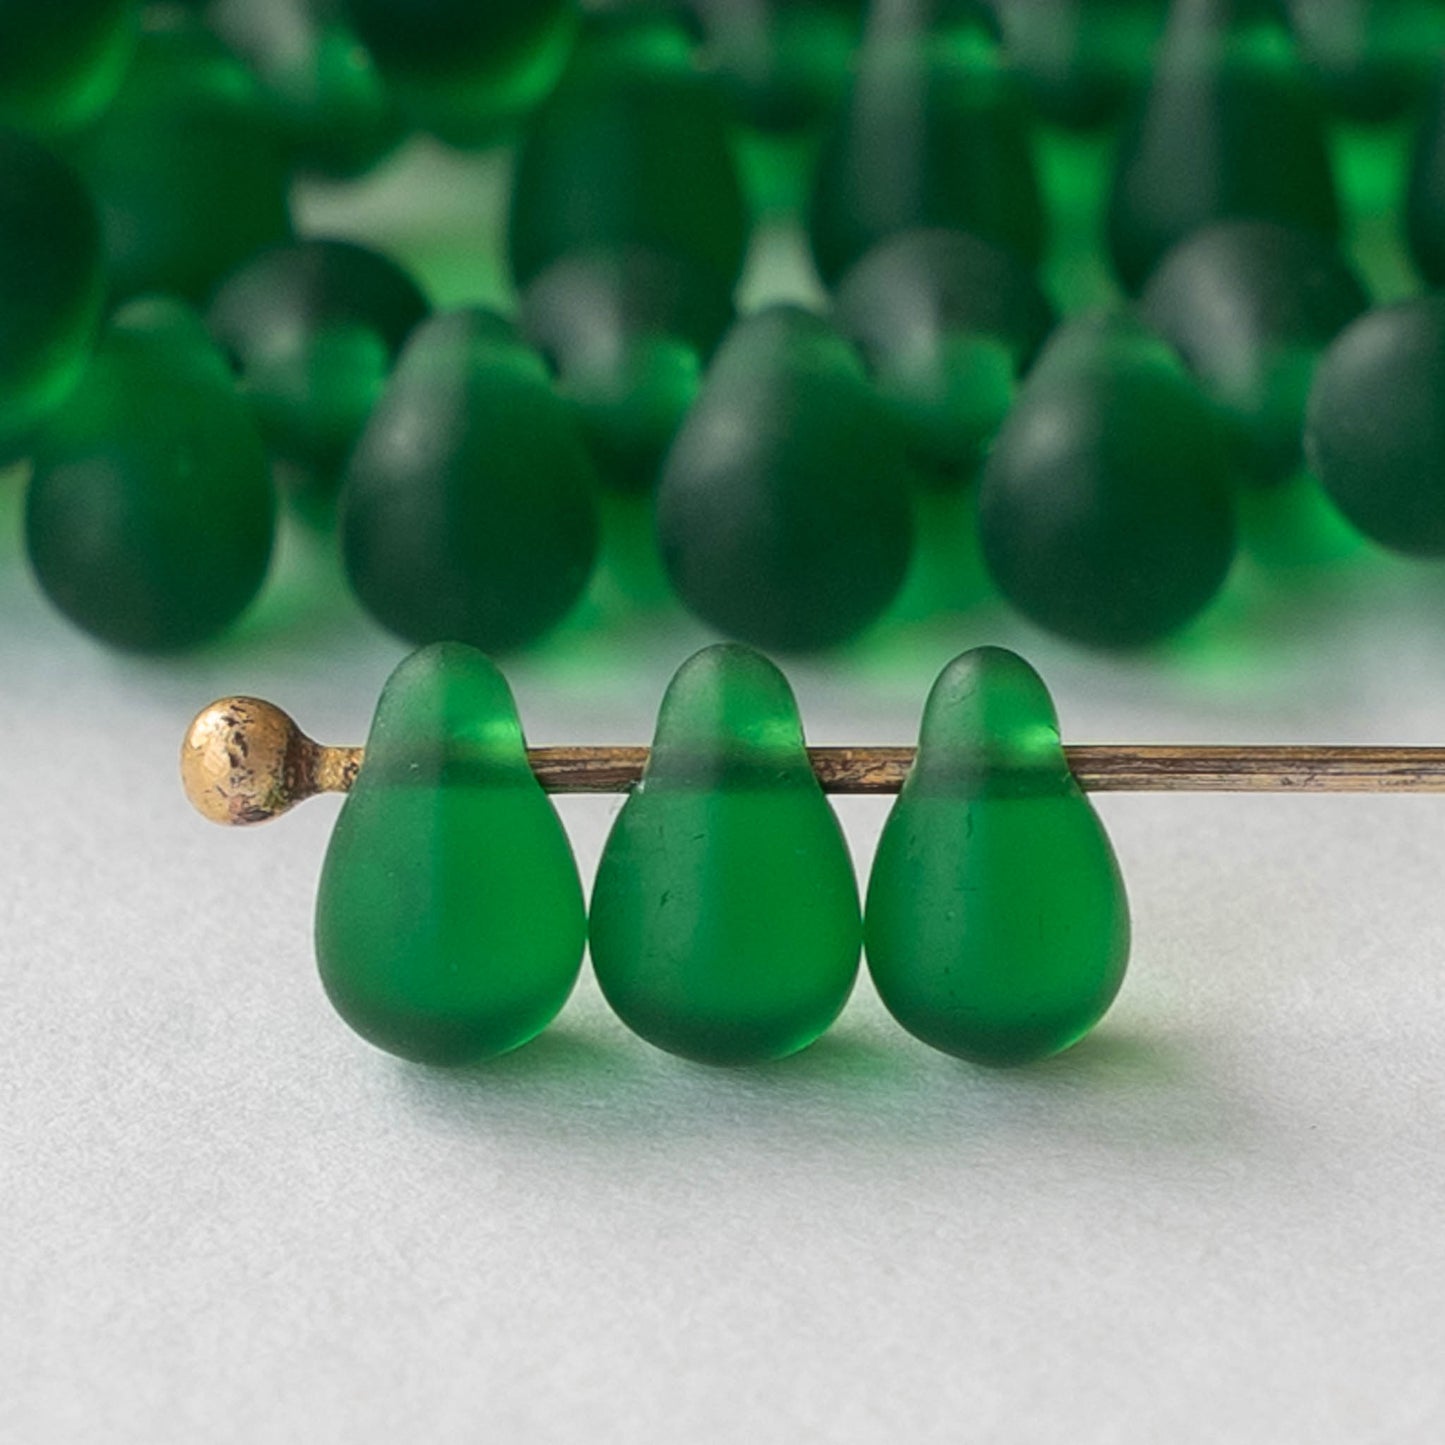 4x6mm Frosted Glass Teardrops - Emerald Green Matte - 100 Beads